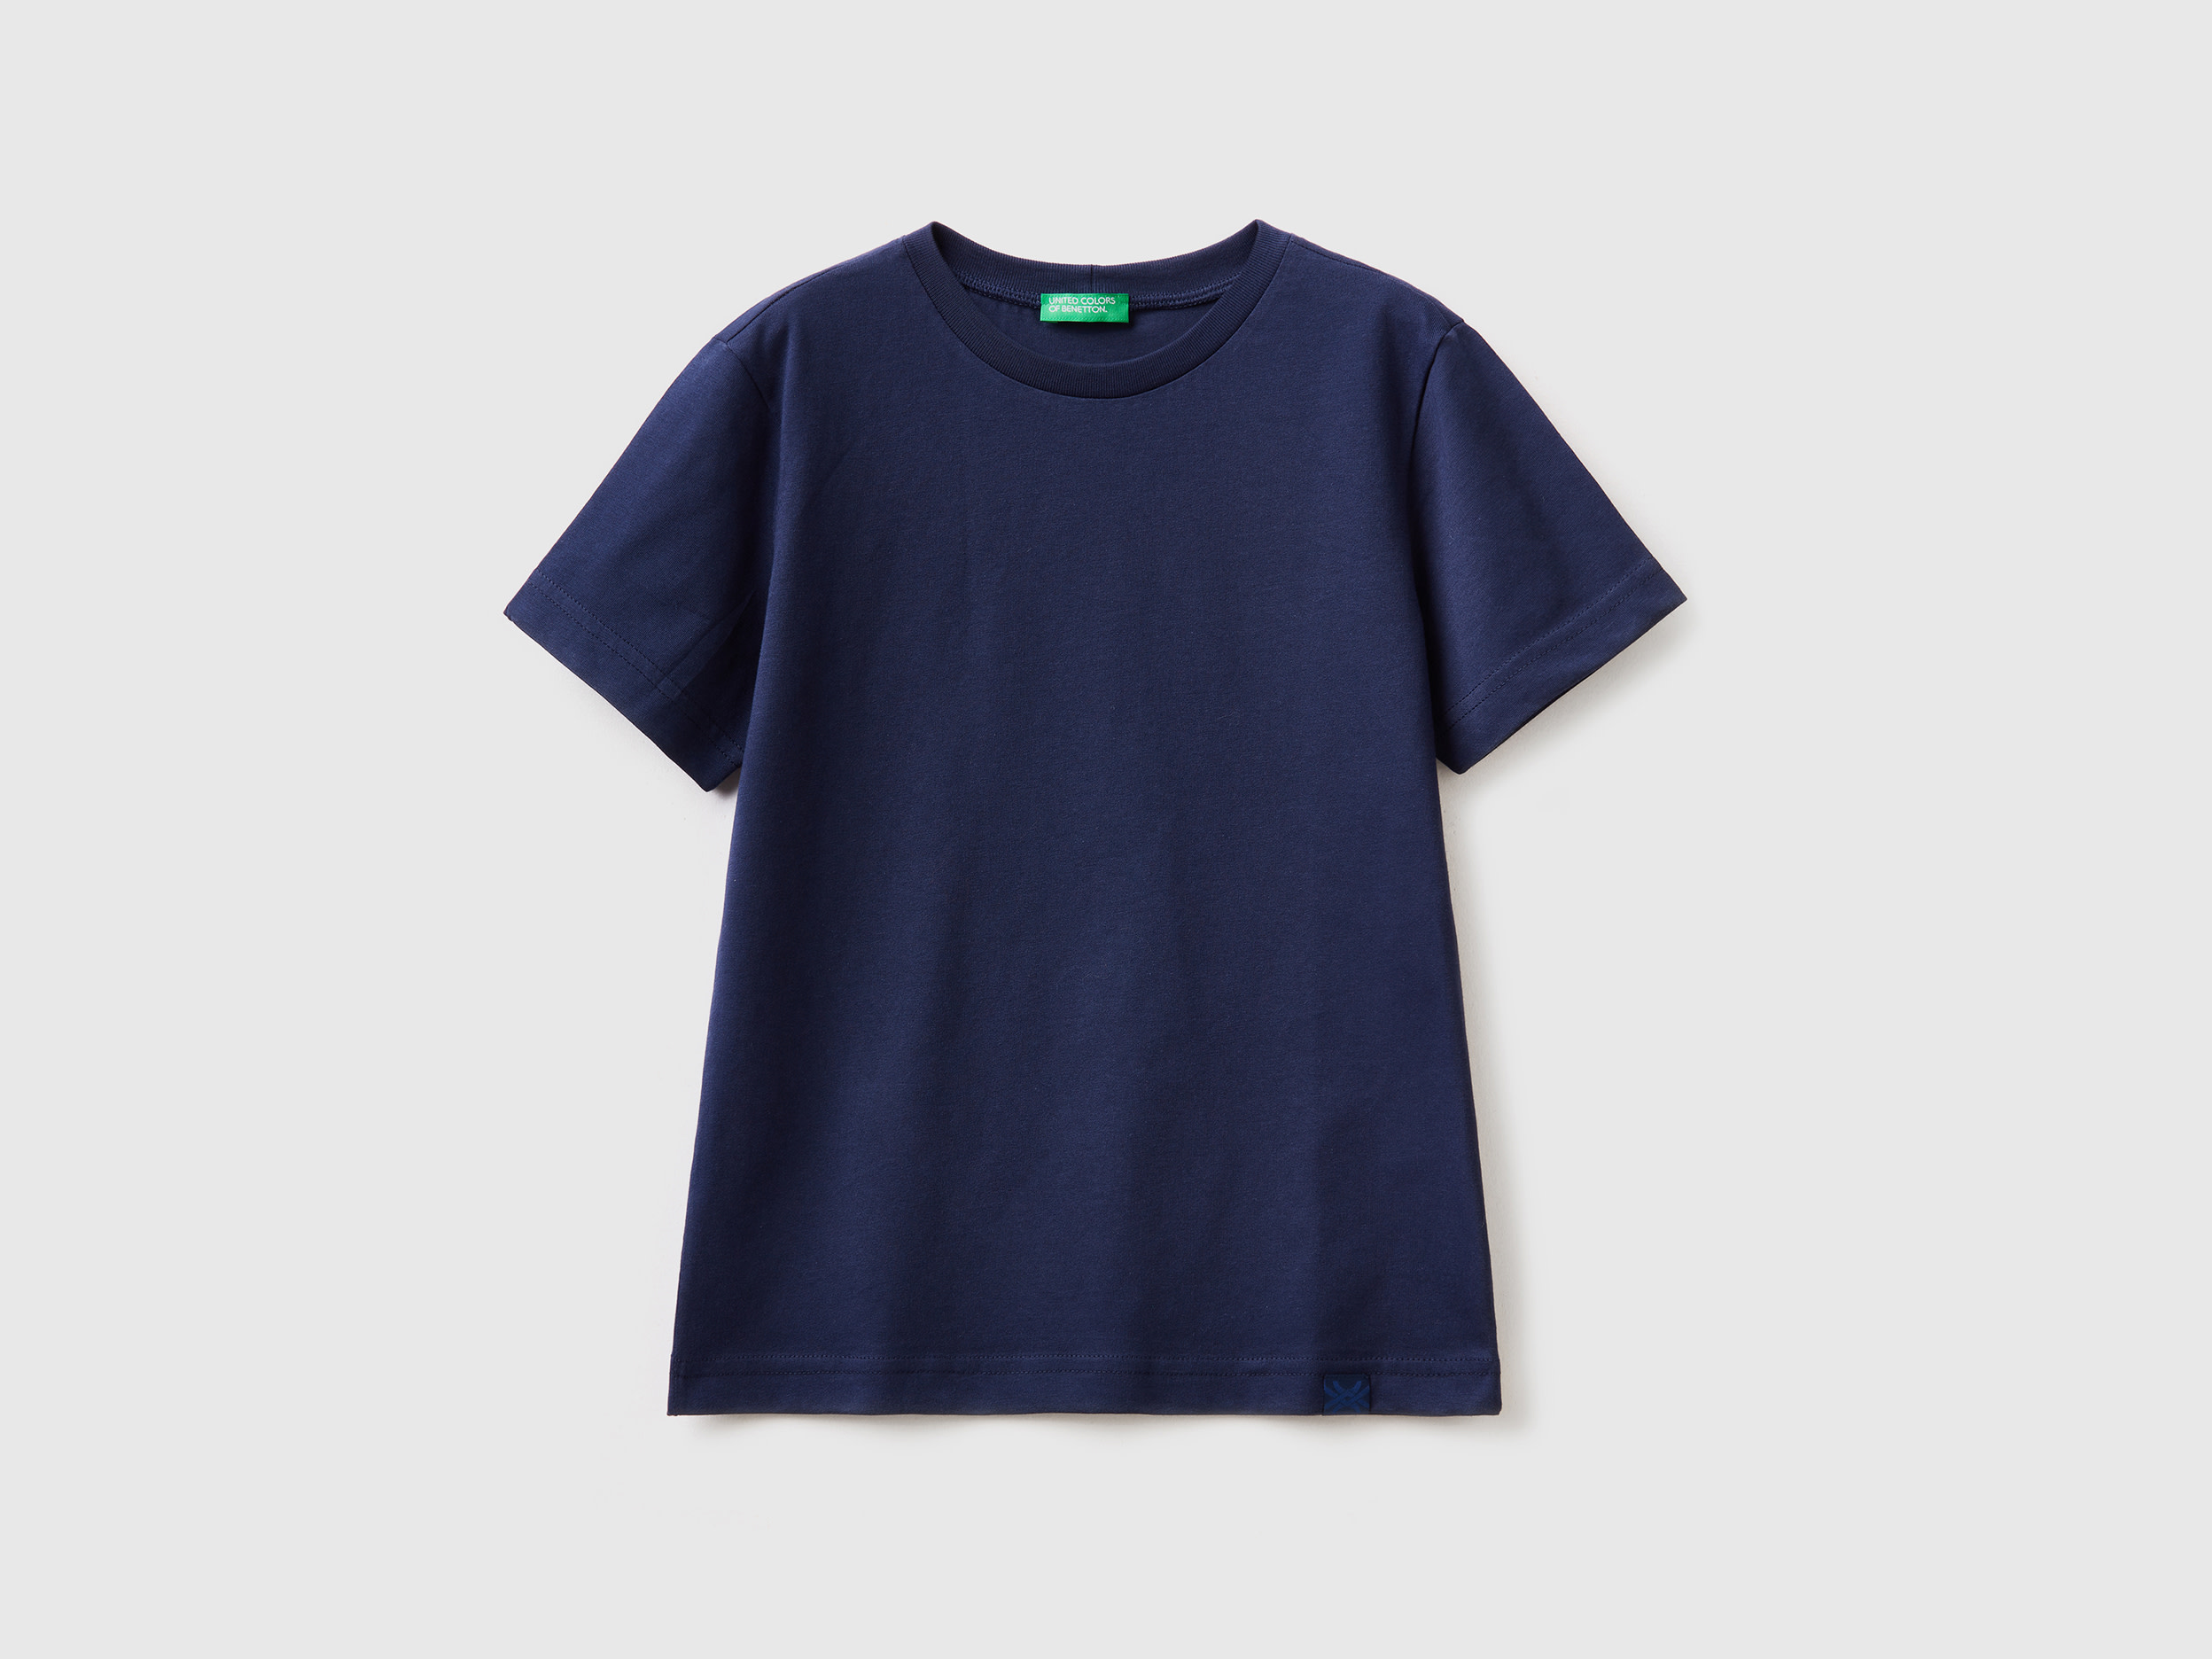 Image of Benetton, Organic Cotton T-shirt, size 2XL, Dark Blue, Kids